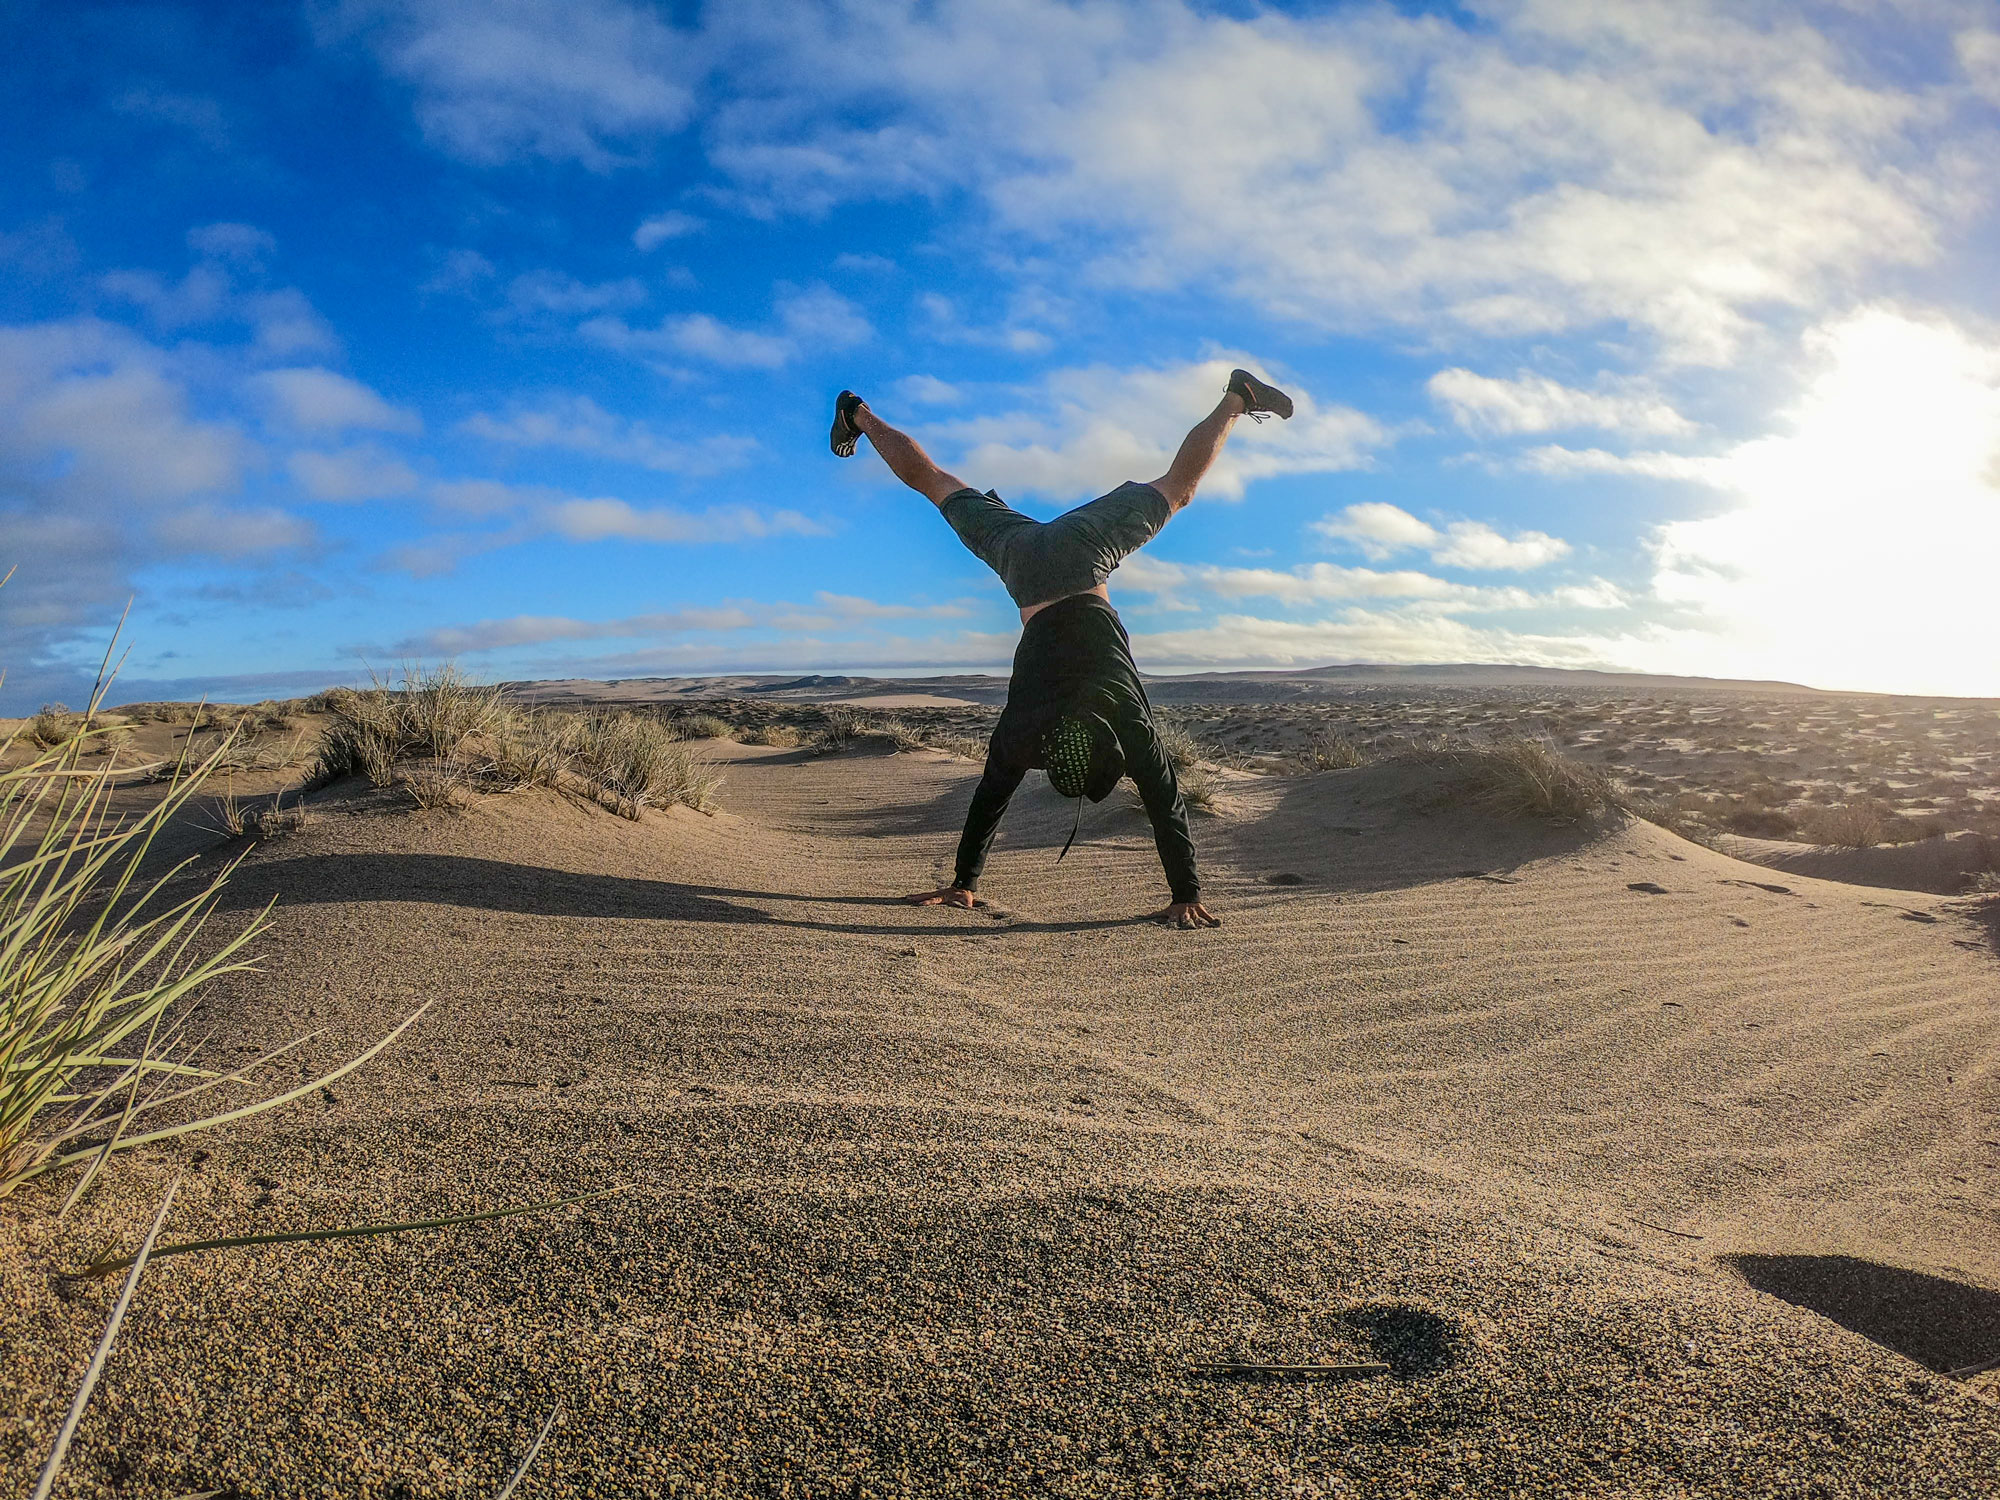 Man doing Handstand in desert